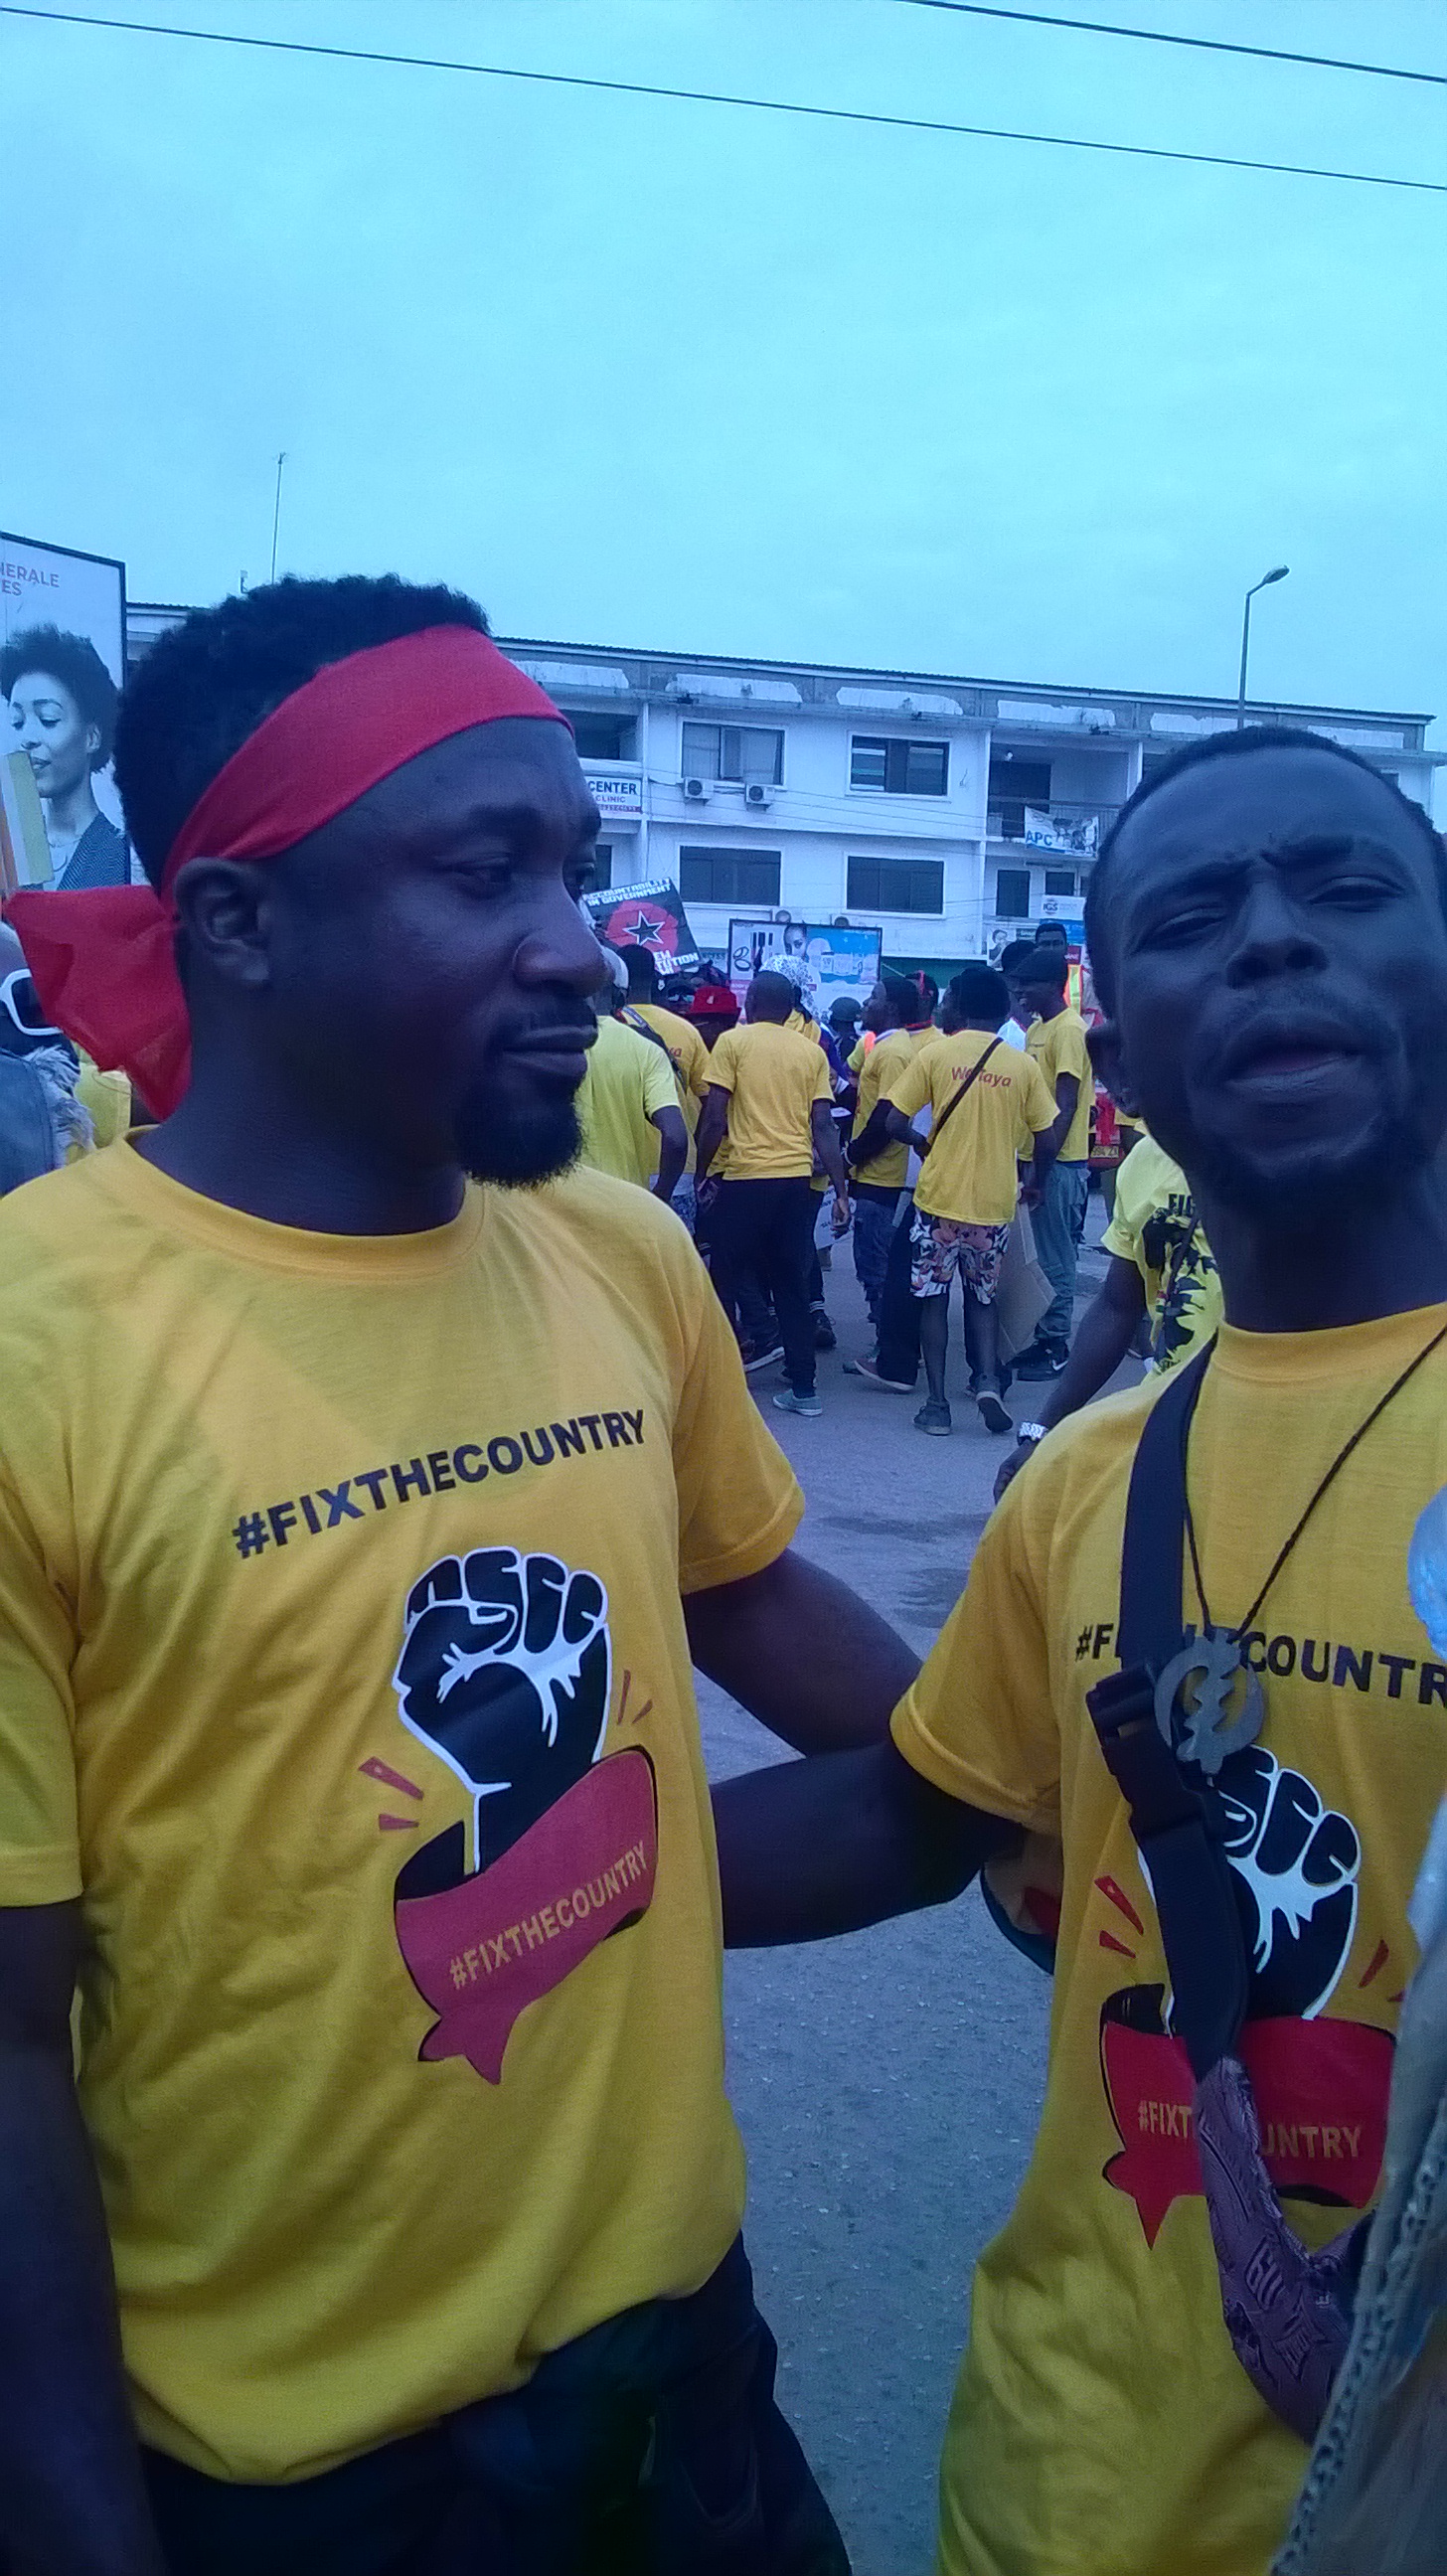 Avaraham Ben Moshe and Gweede Baakop3 at FIXTHECOUNTRY Campaign At Sekondi-Takoradi